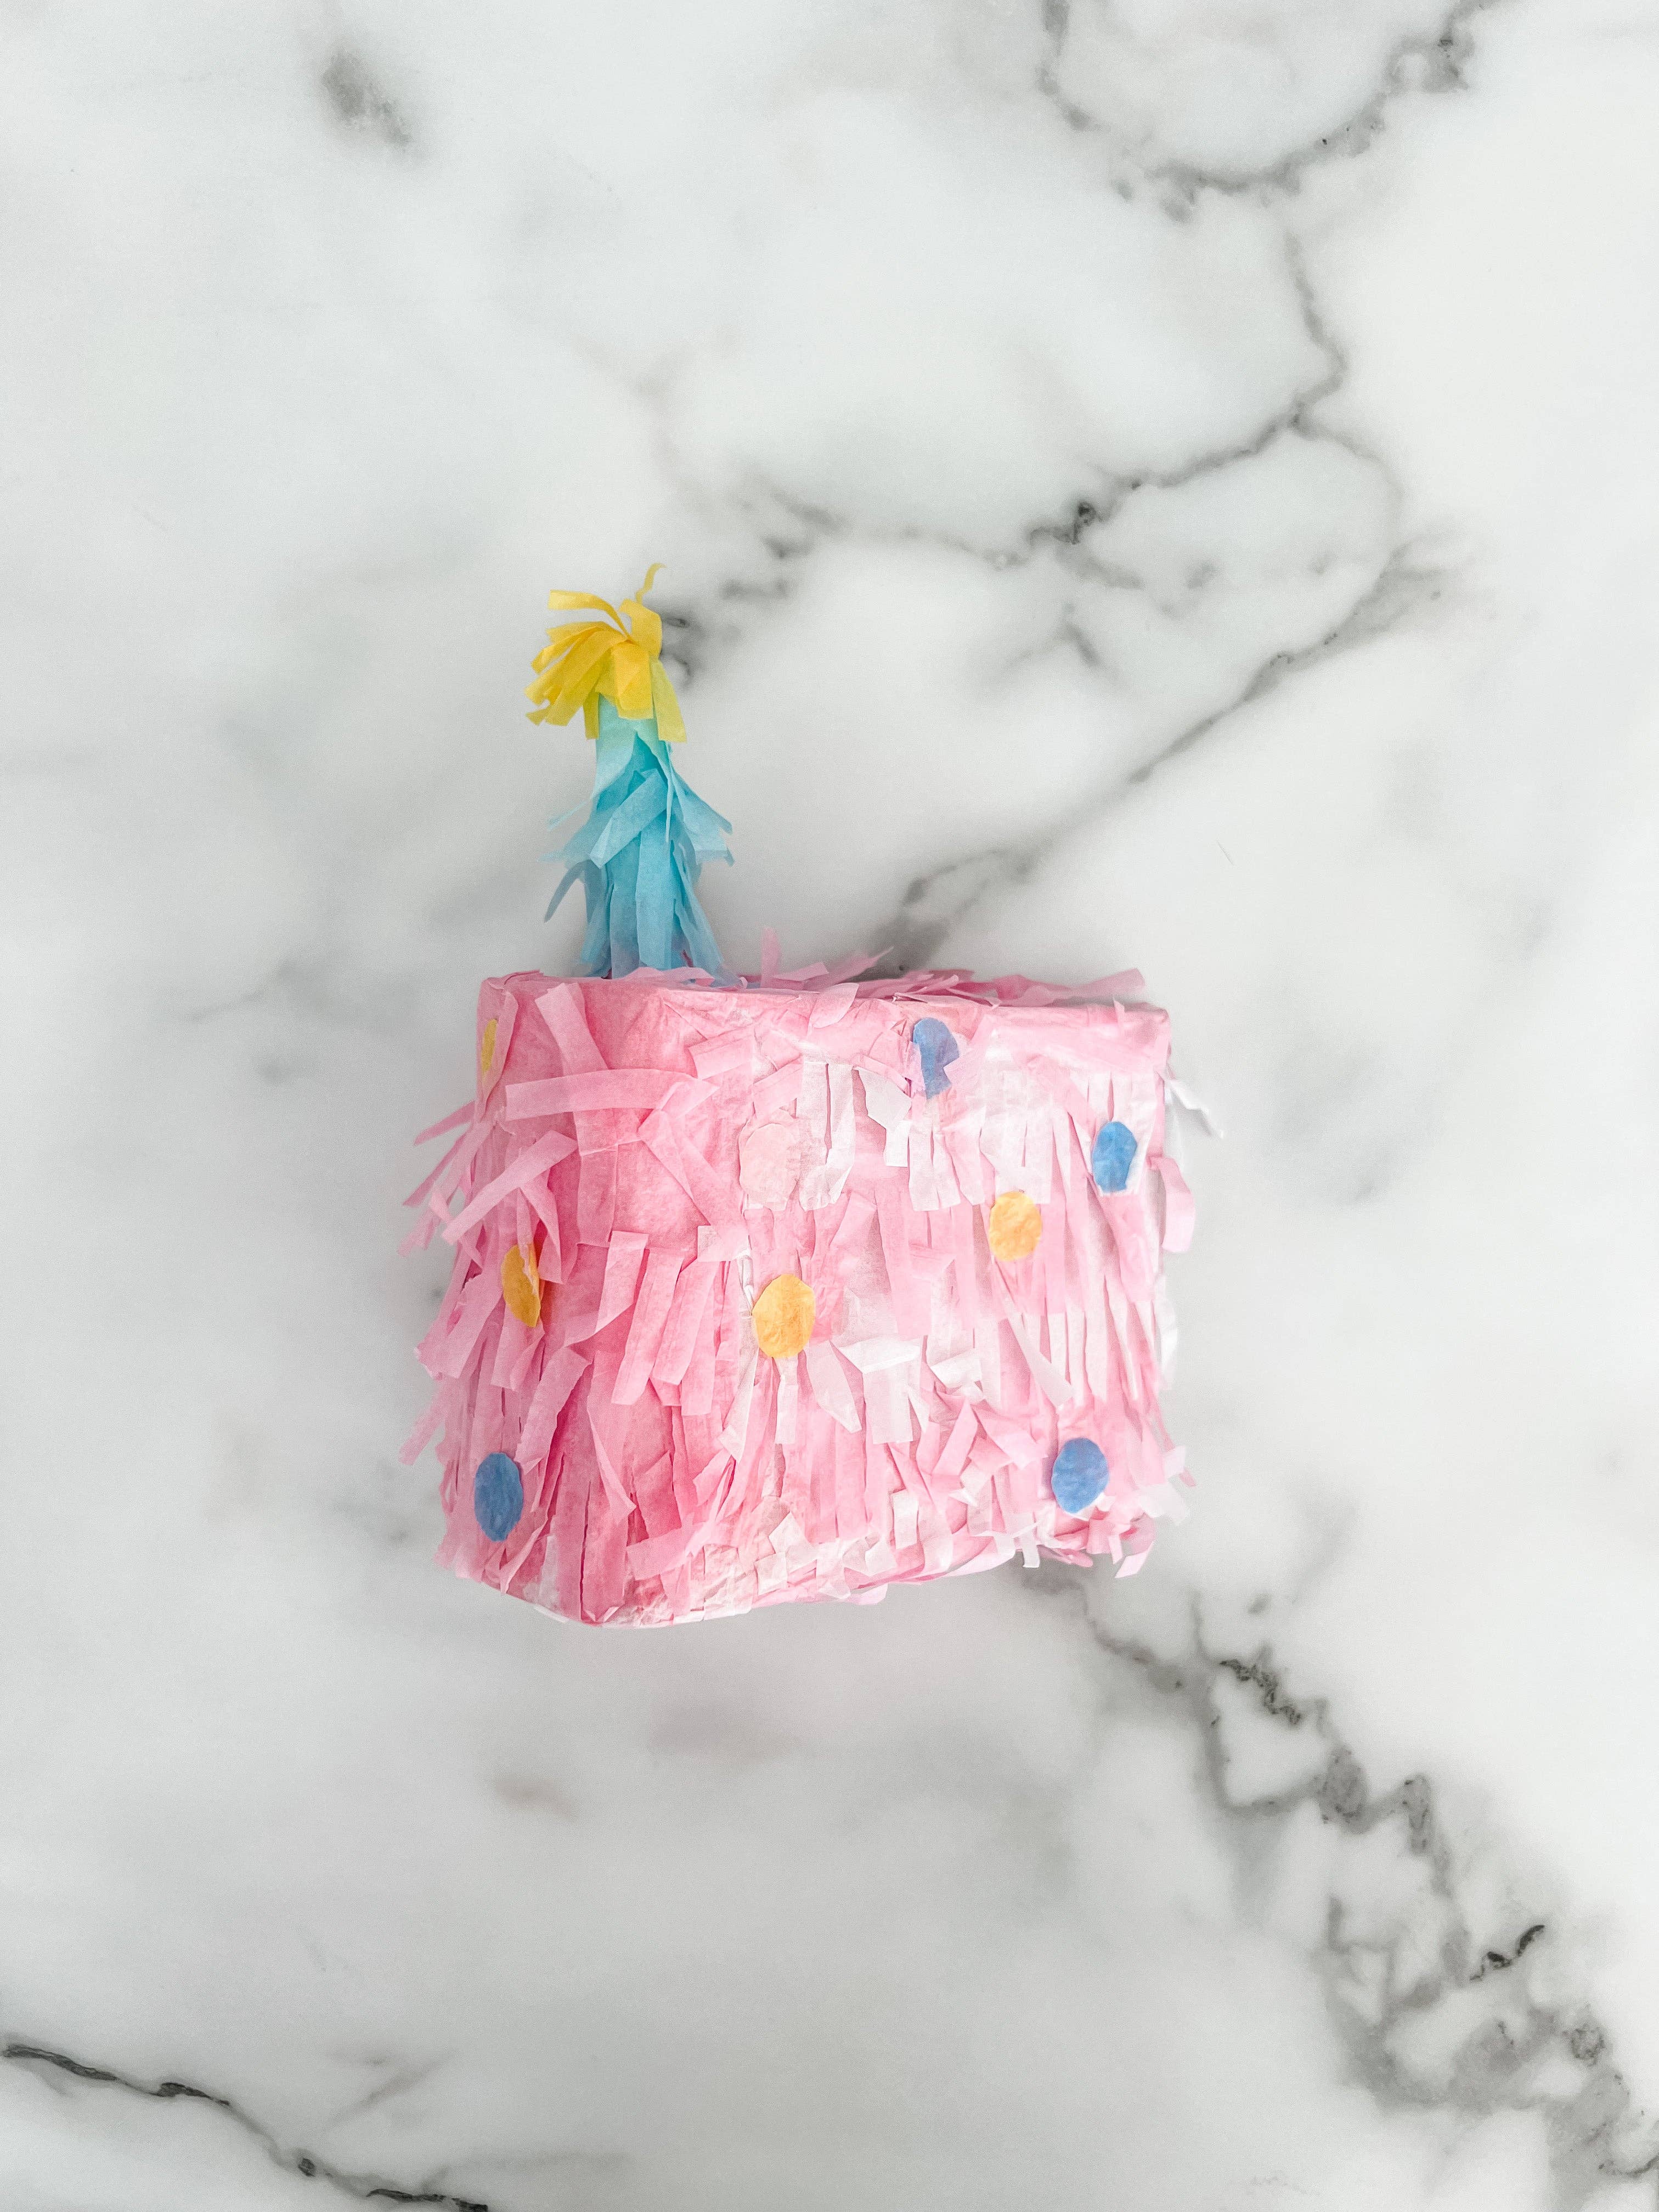 Malibu Barbie Pinata Kit with Candy